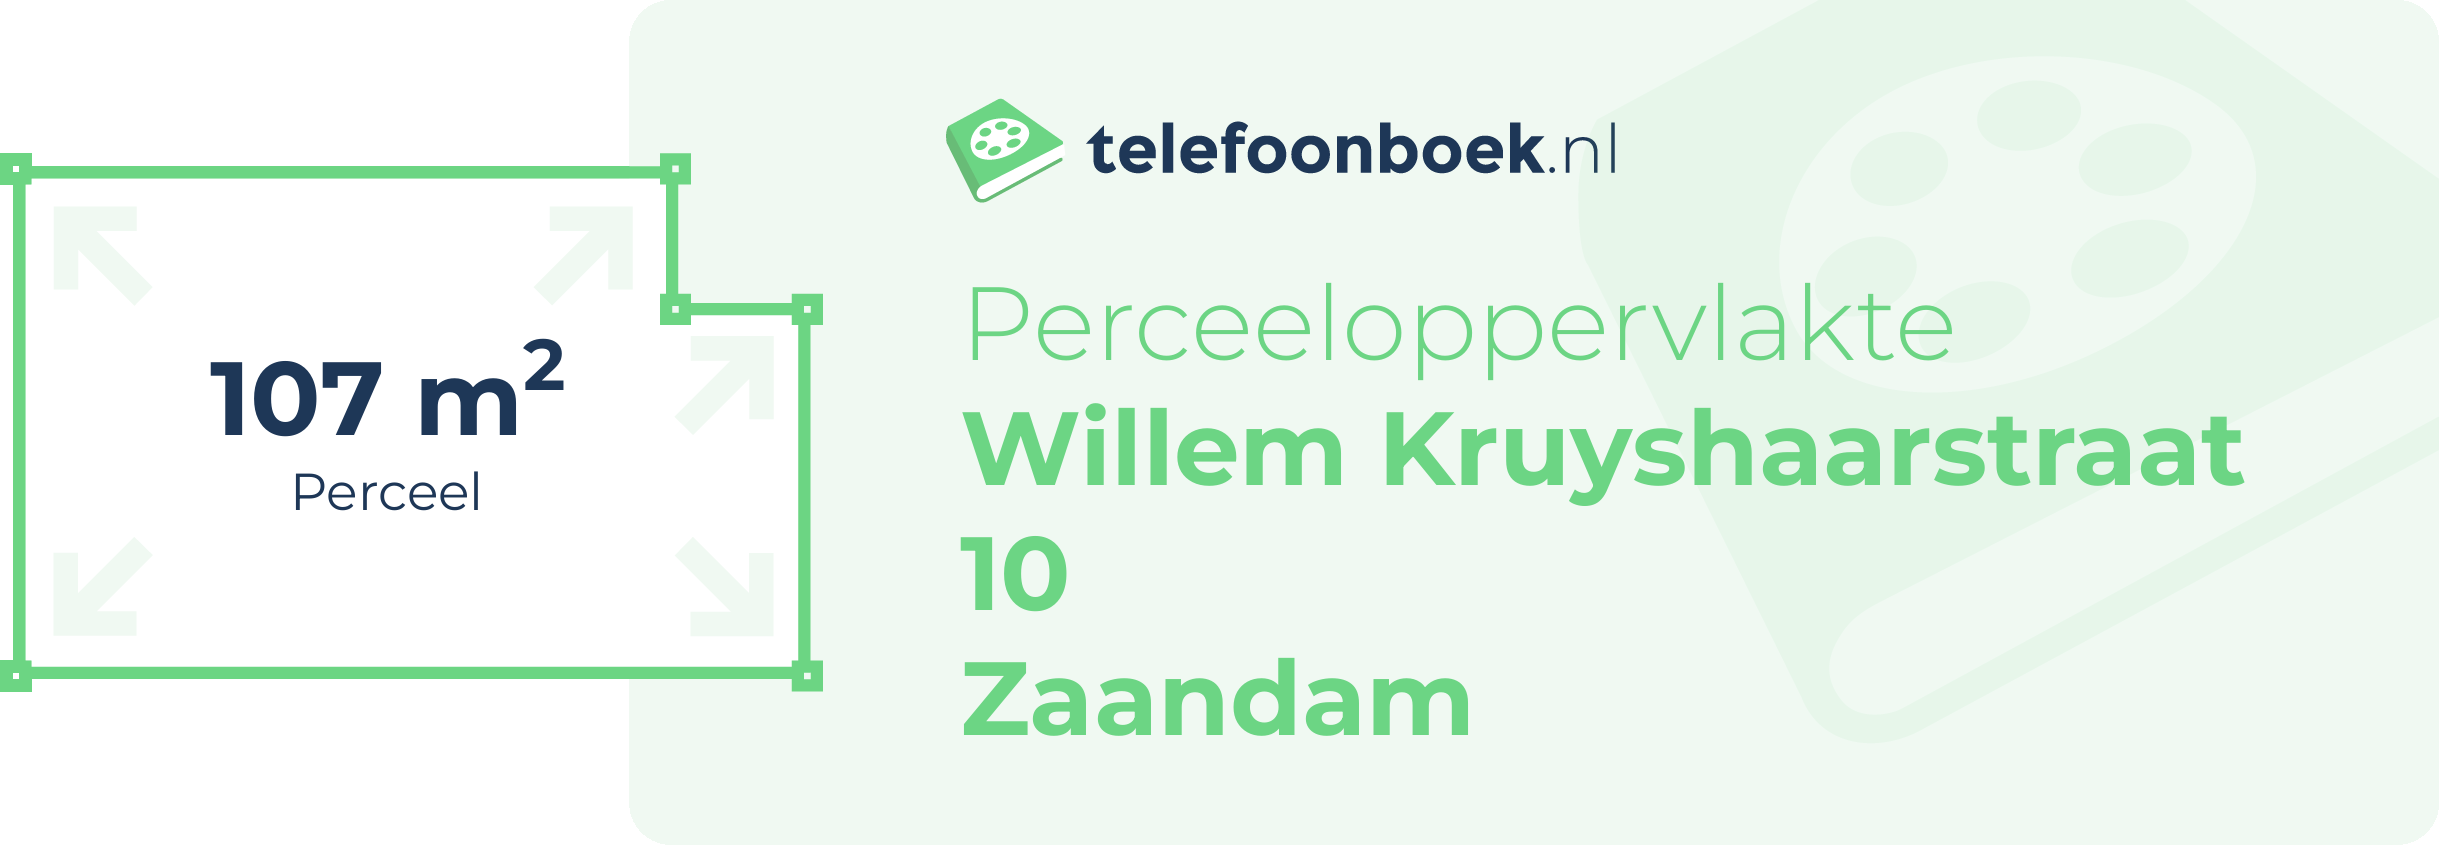 Perceeloppervlakte Willem Kruyshaarstraat 10 Zaandam